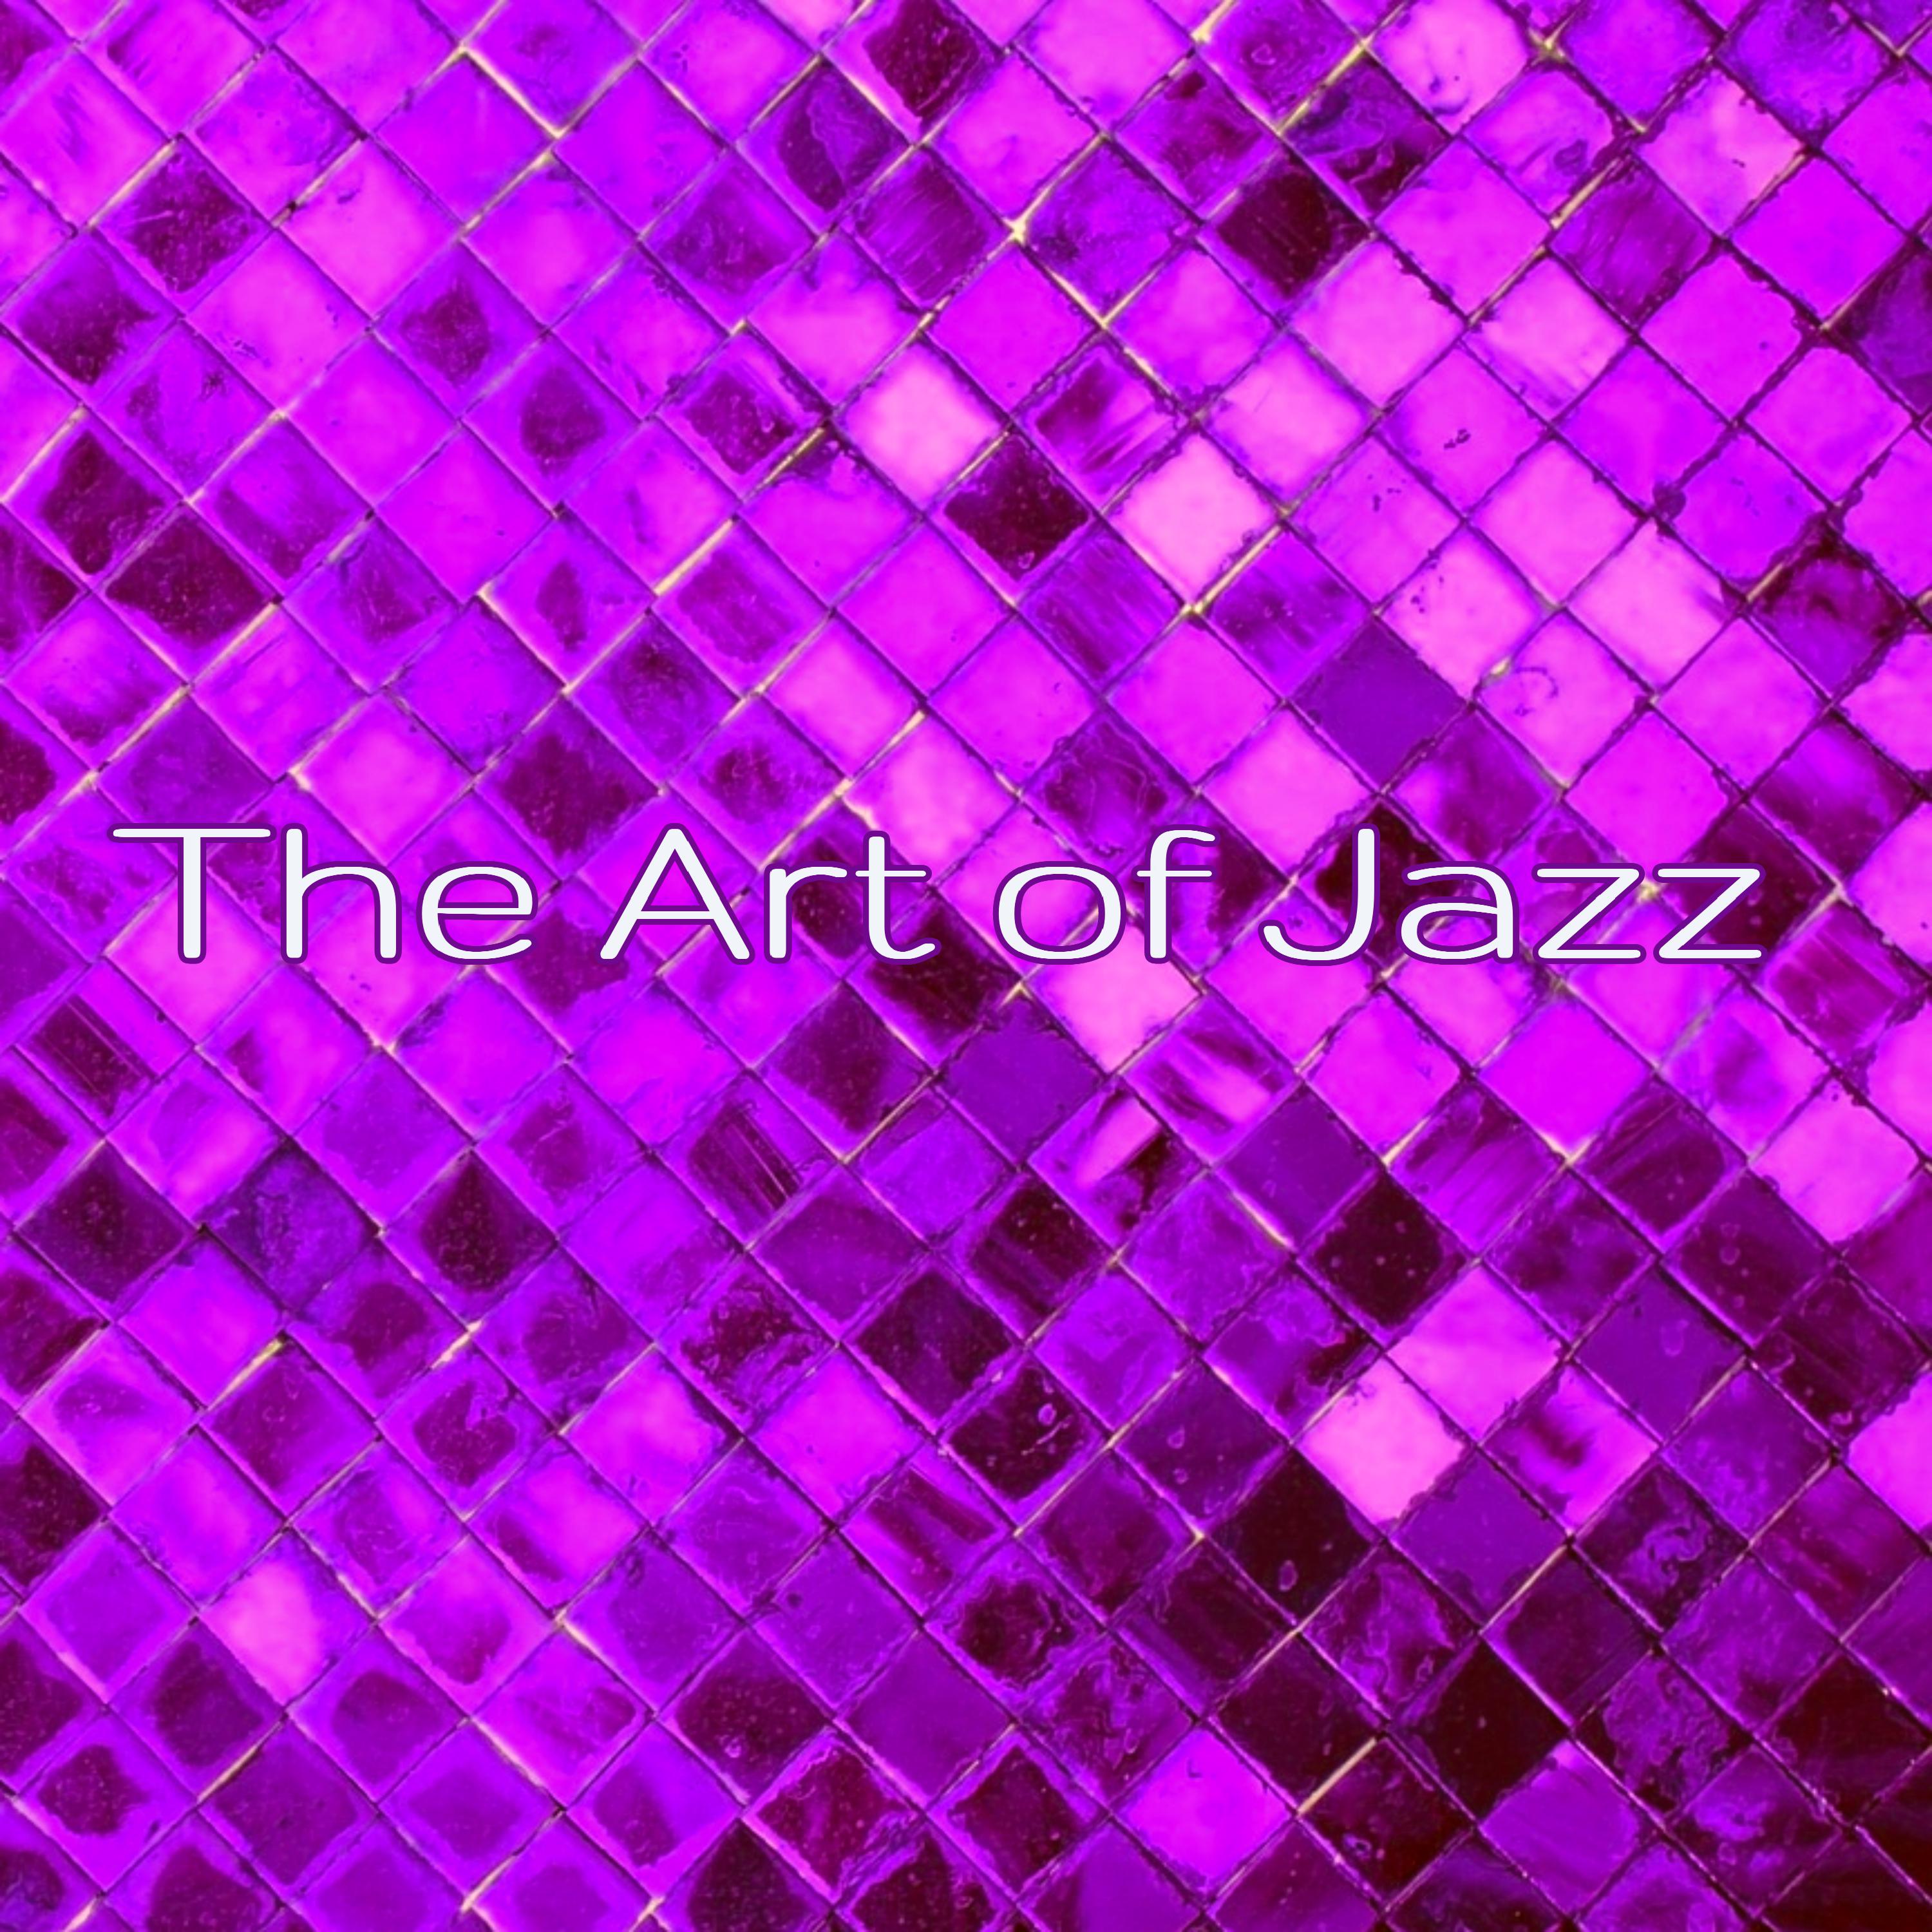 The Art of Jazz